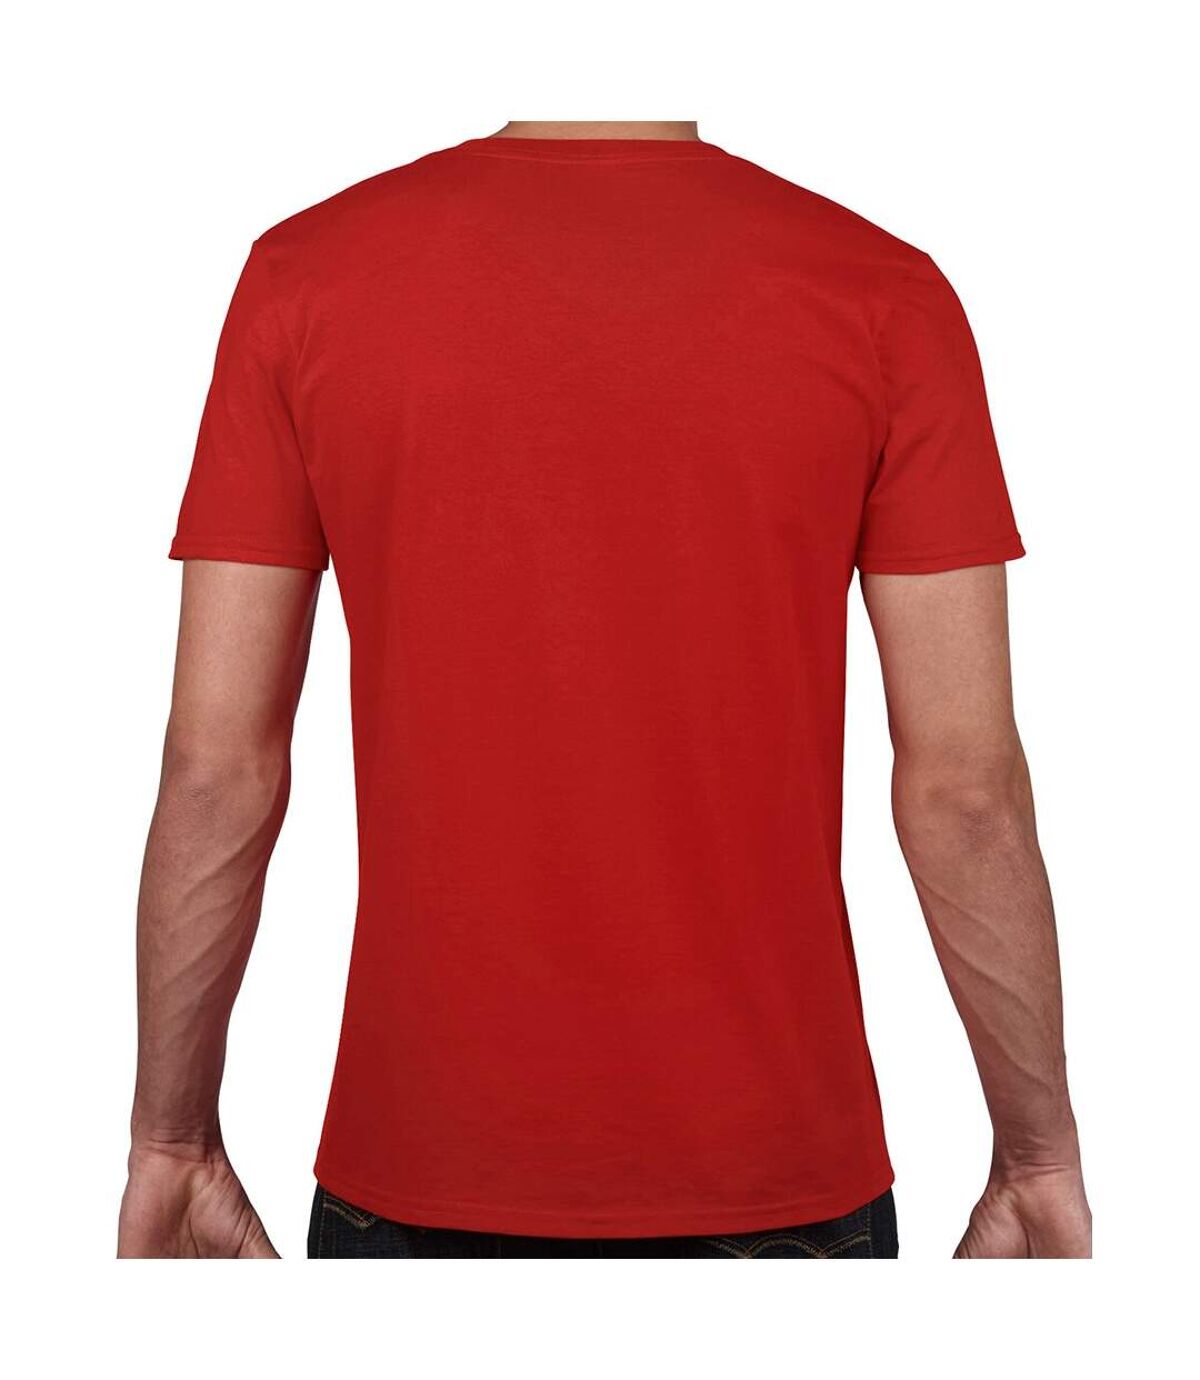 Gildan Adults Unisex Short Sleeve Premium Cotton V-Neck T-Shirt (Red) - UTRW4738